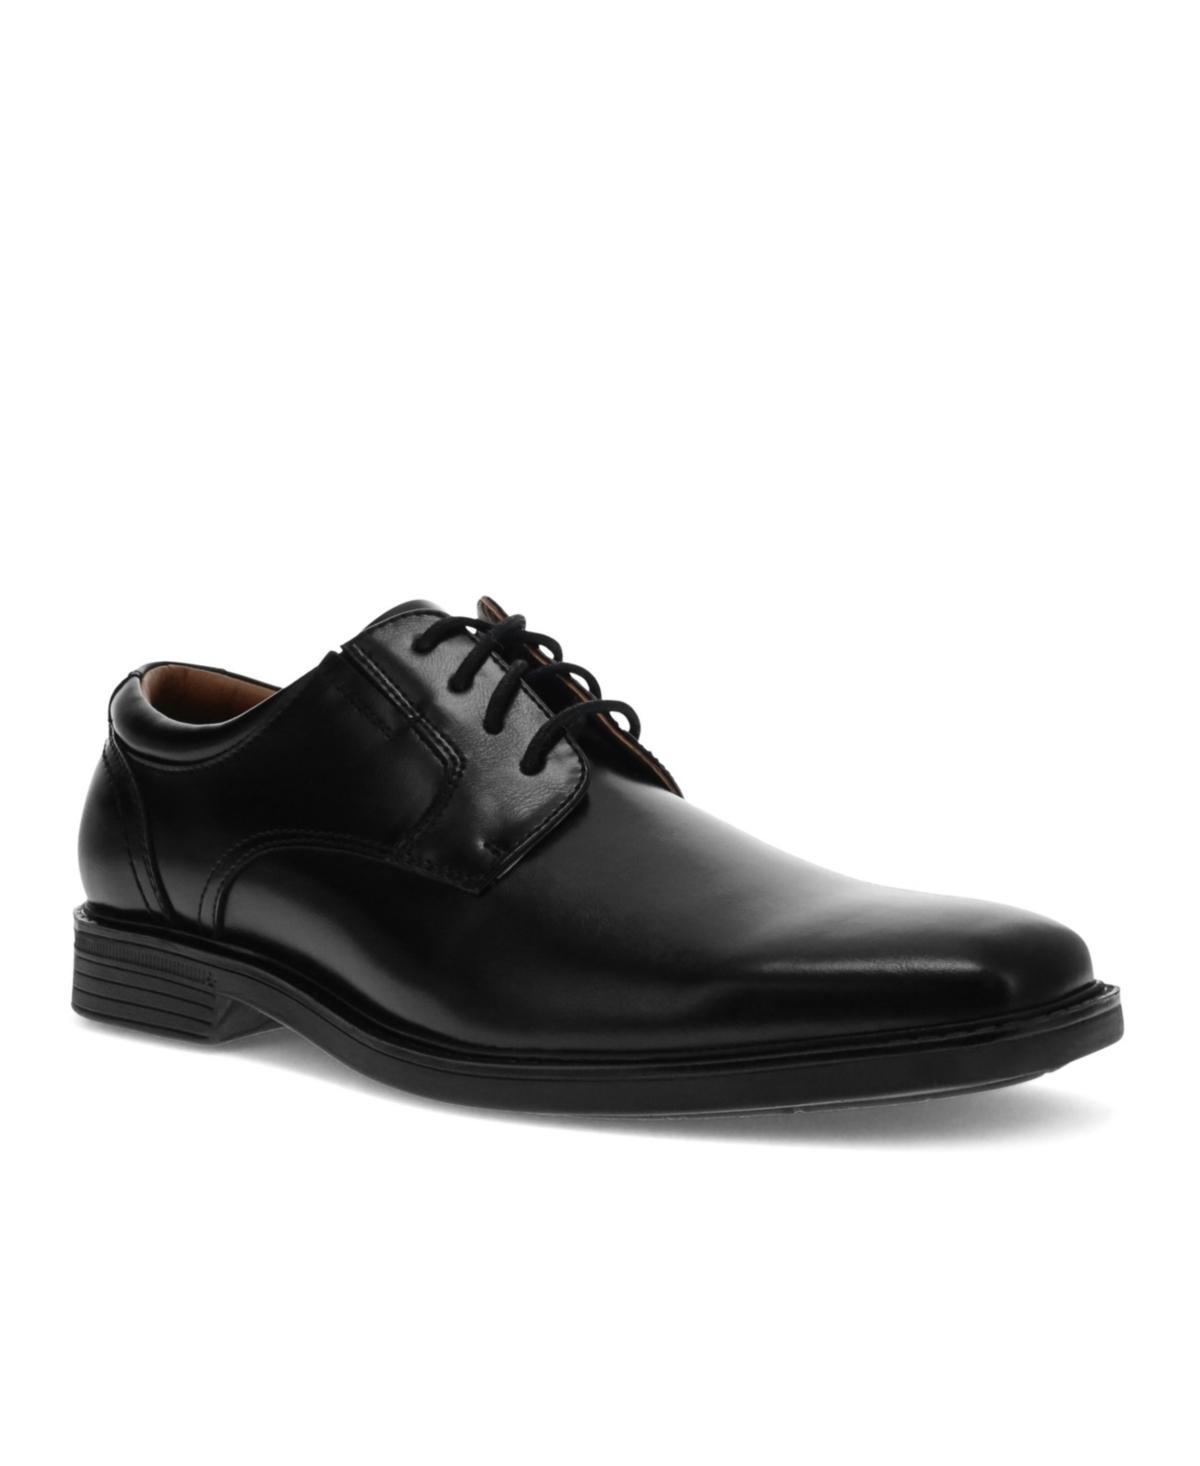 Dockers Stiles Mens Oxford Dress Shoes Black Product Image